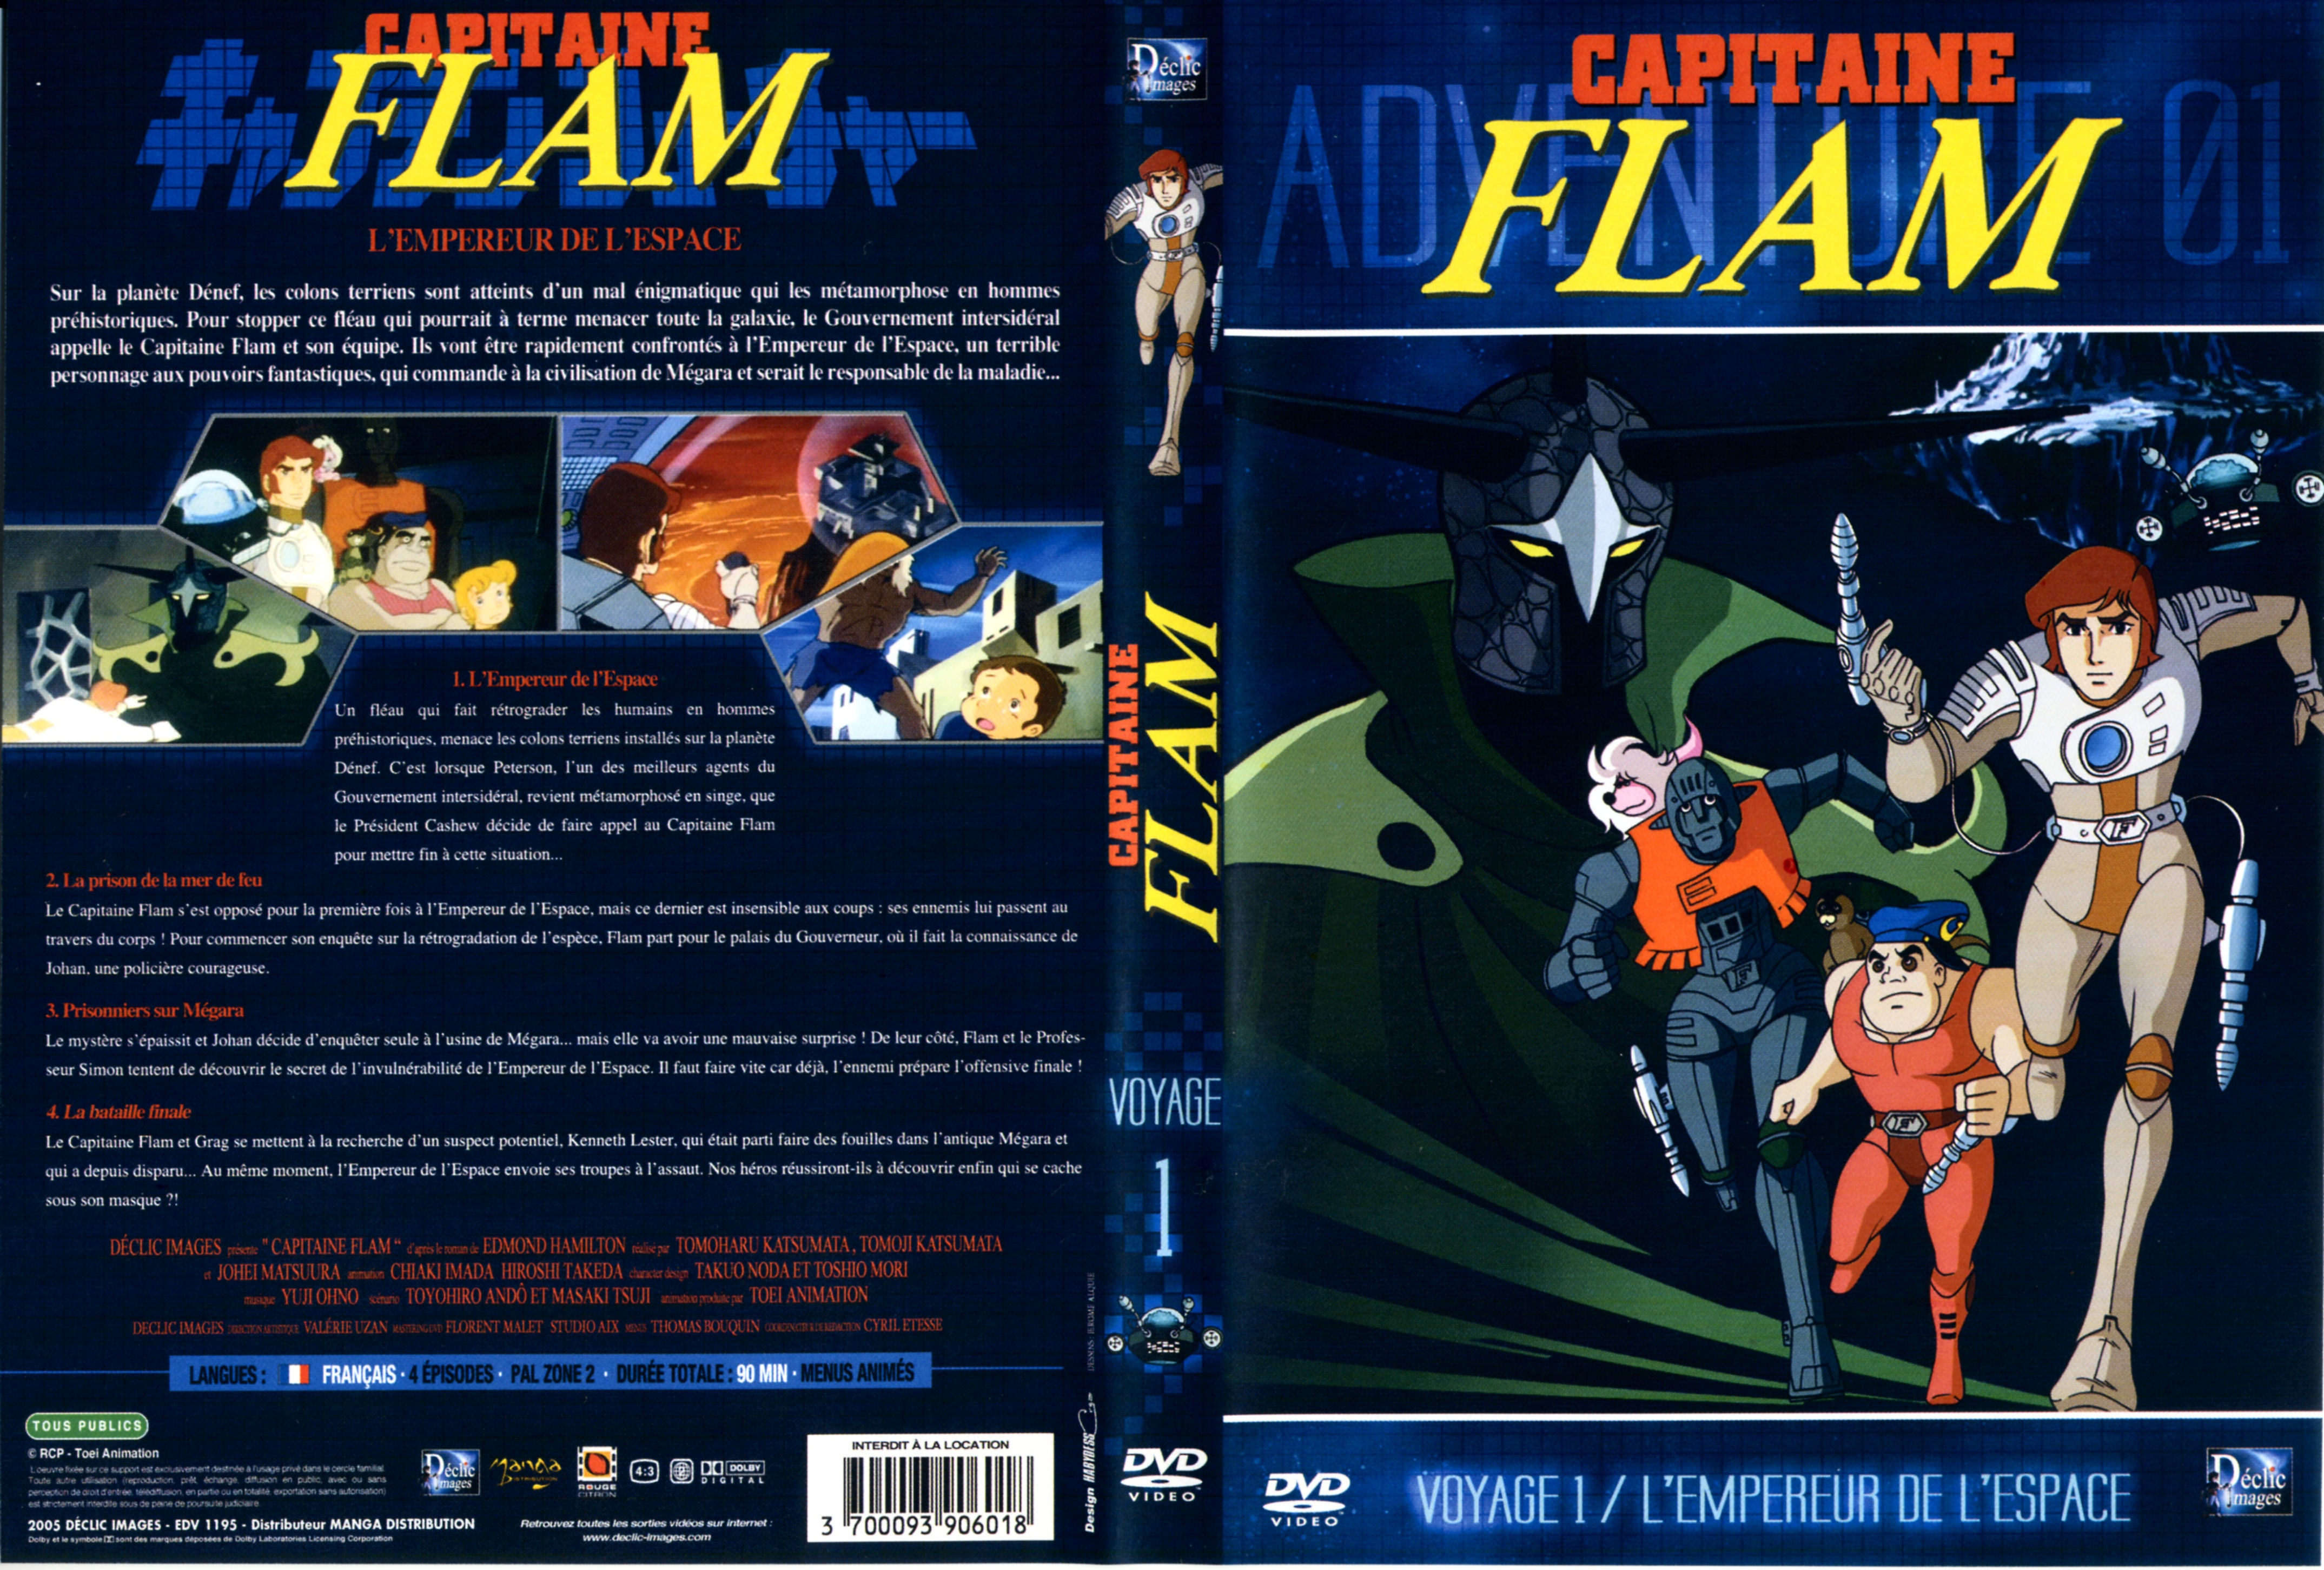 Jaquette DVD Capitaine Flam vol 1 (DECLIC IMAGES)